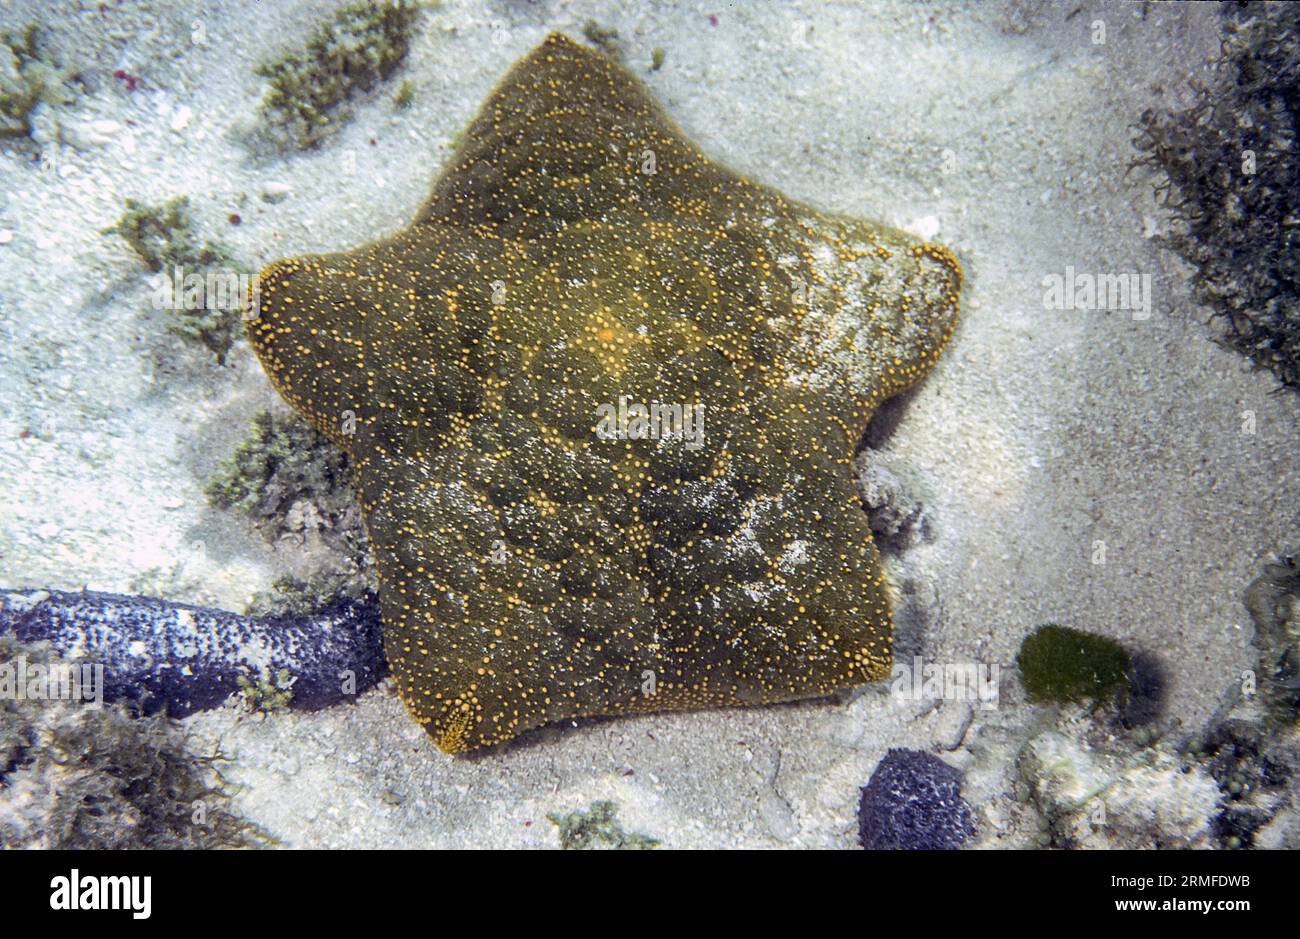 Spiny cushion star (Culcita schmideliana) from Heron Island, southern Great Barrier Reef. Stock Photo